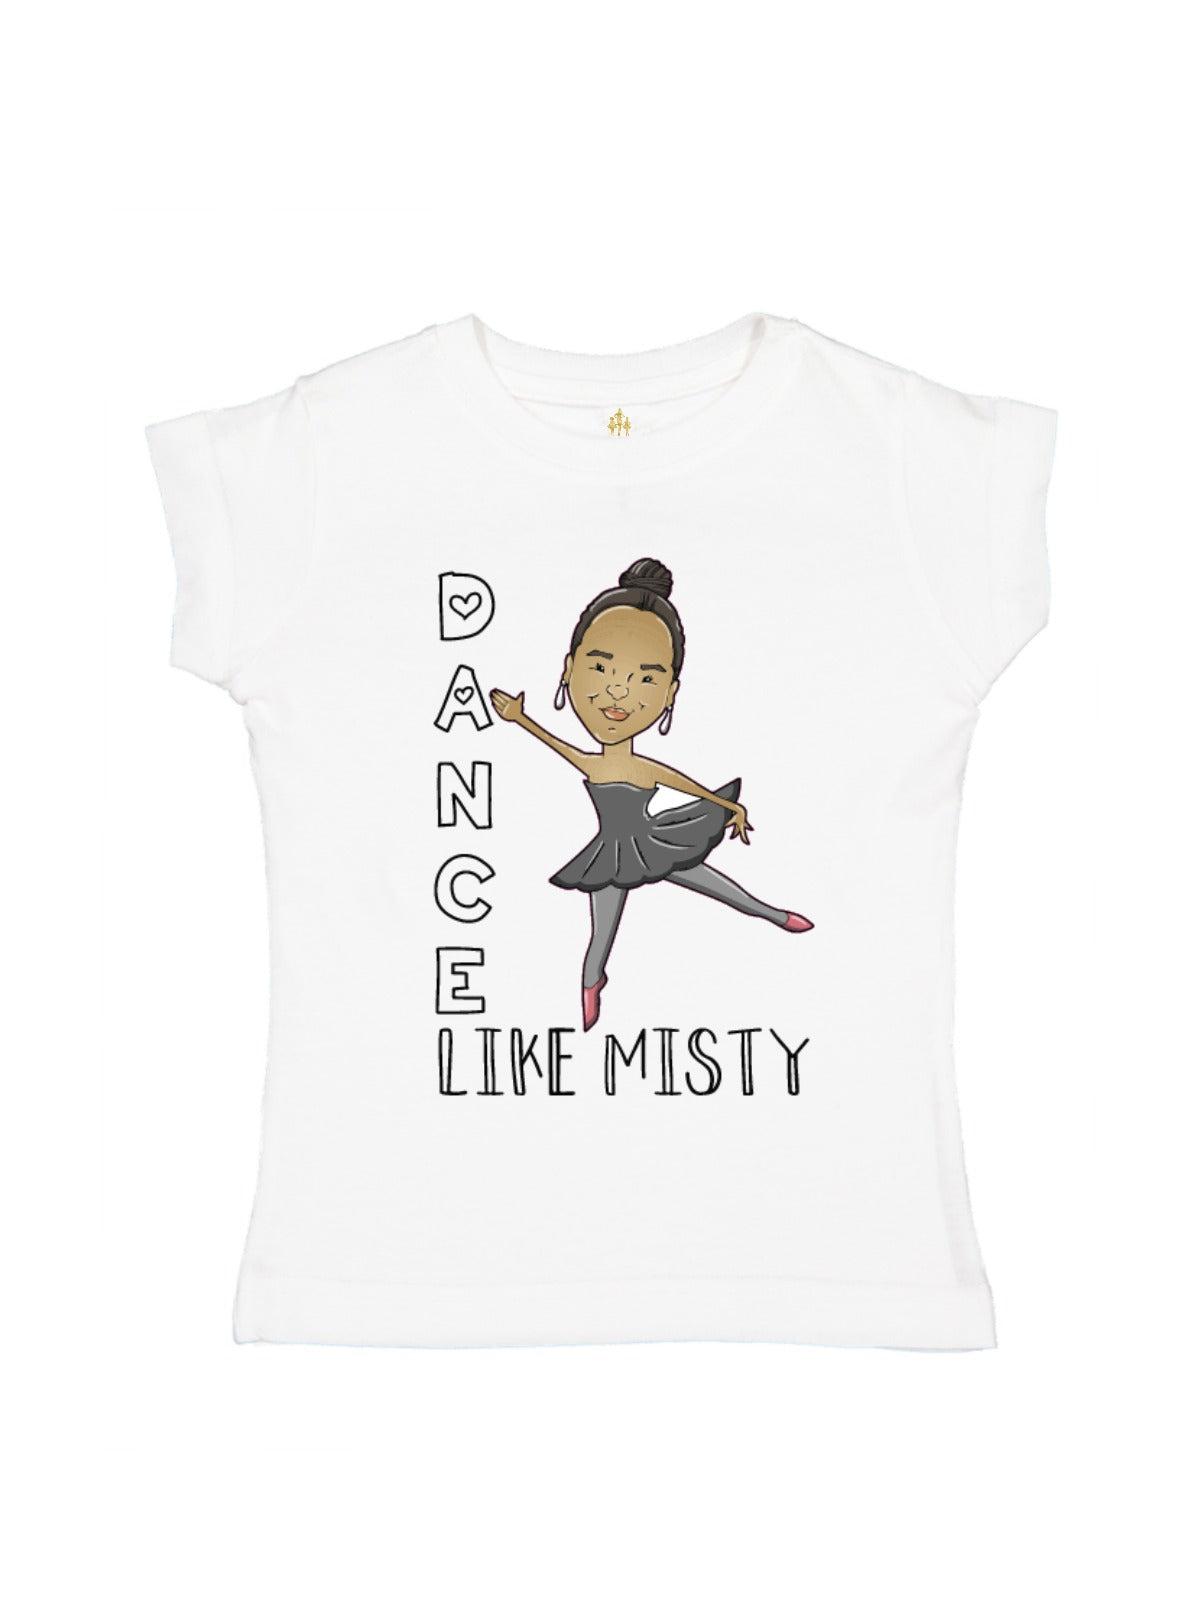 Dance like Misty Copeland Kids Black History Shirt